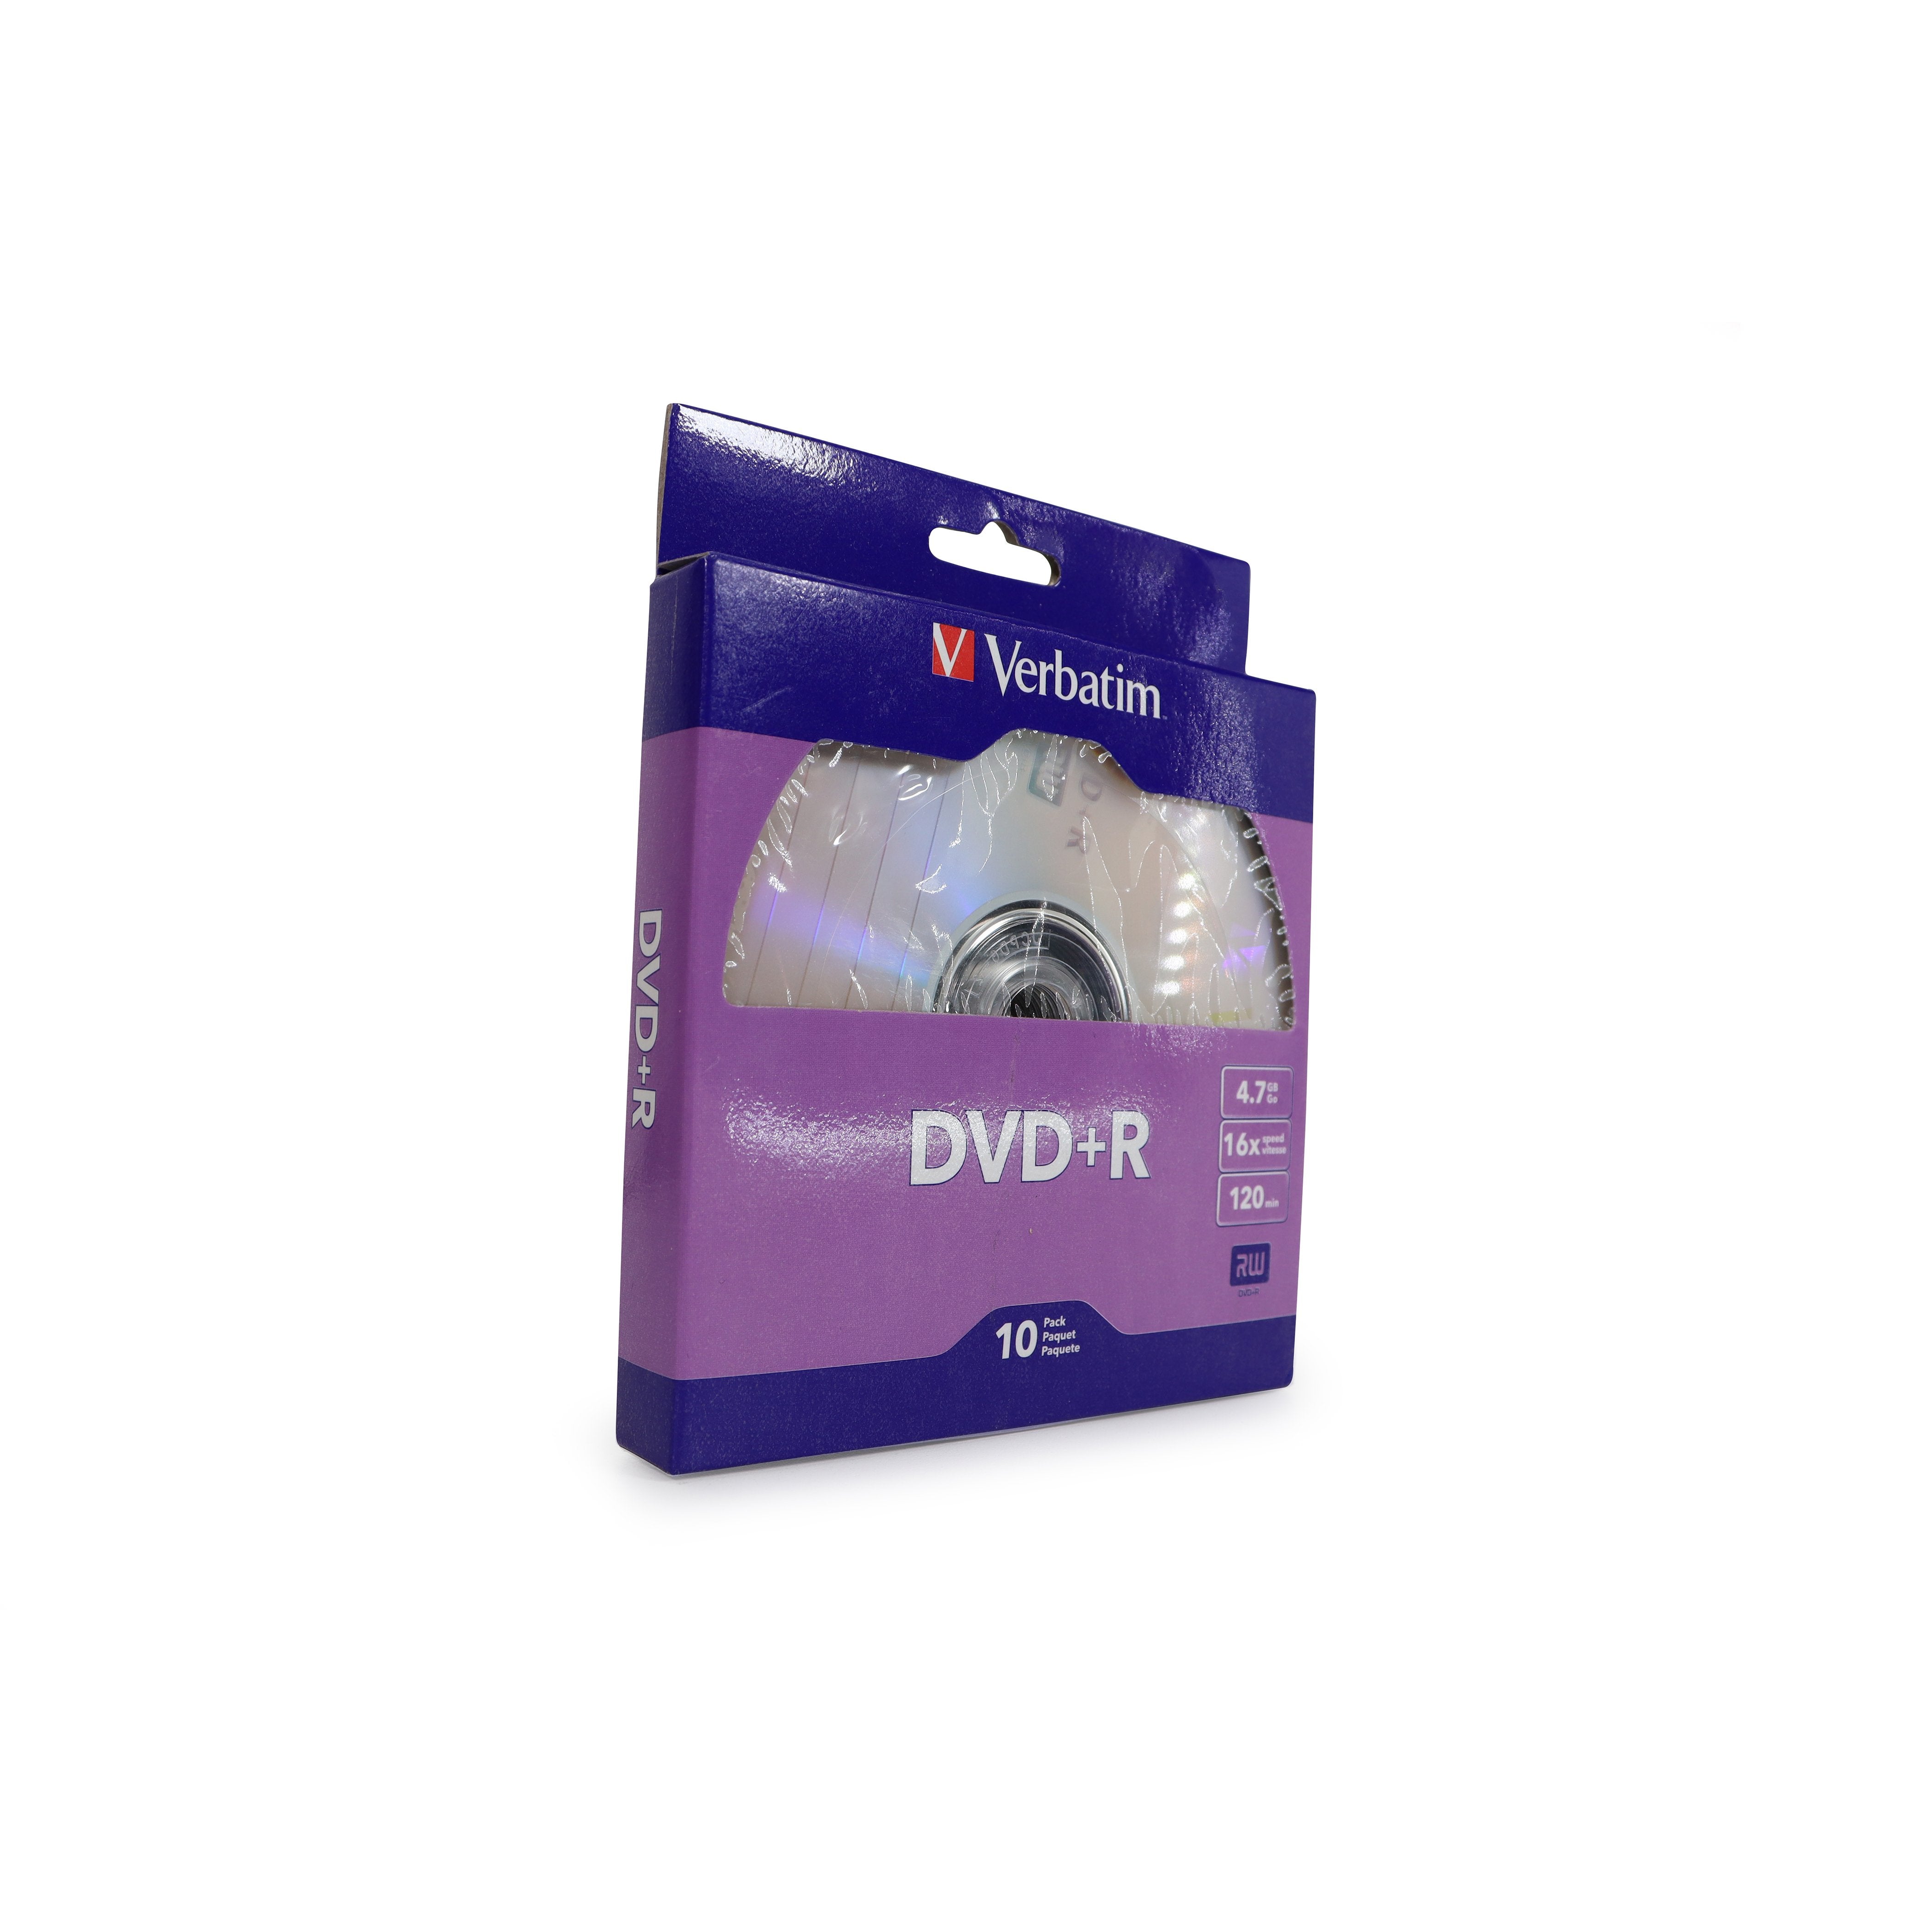 Verbatim DVD-R Recordable Discs for sale